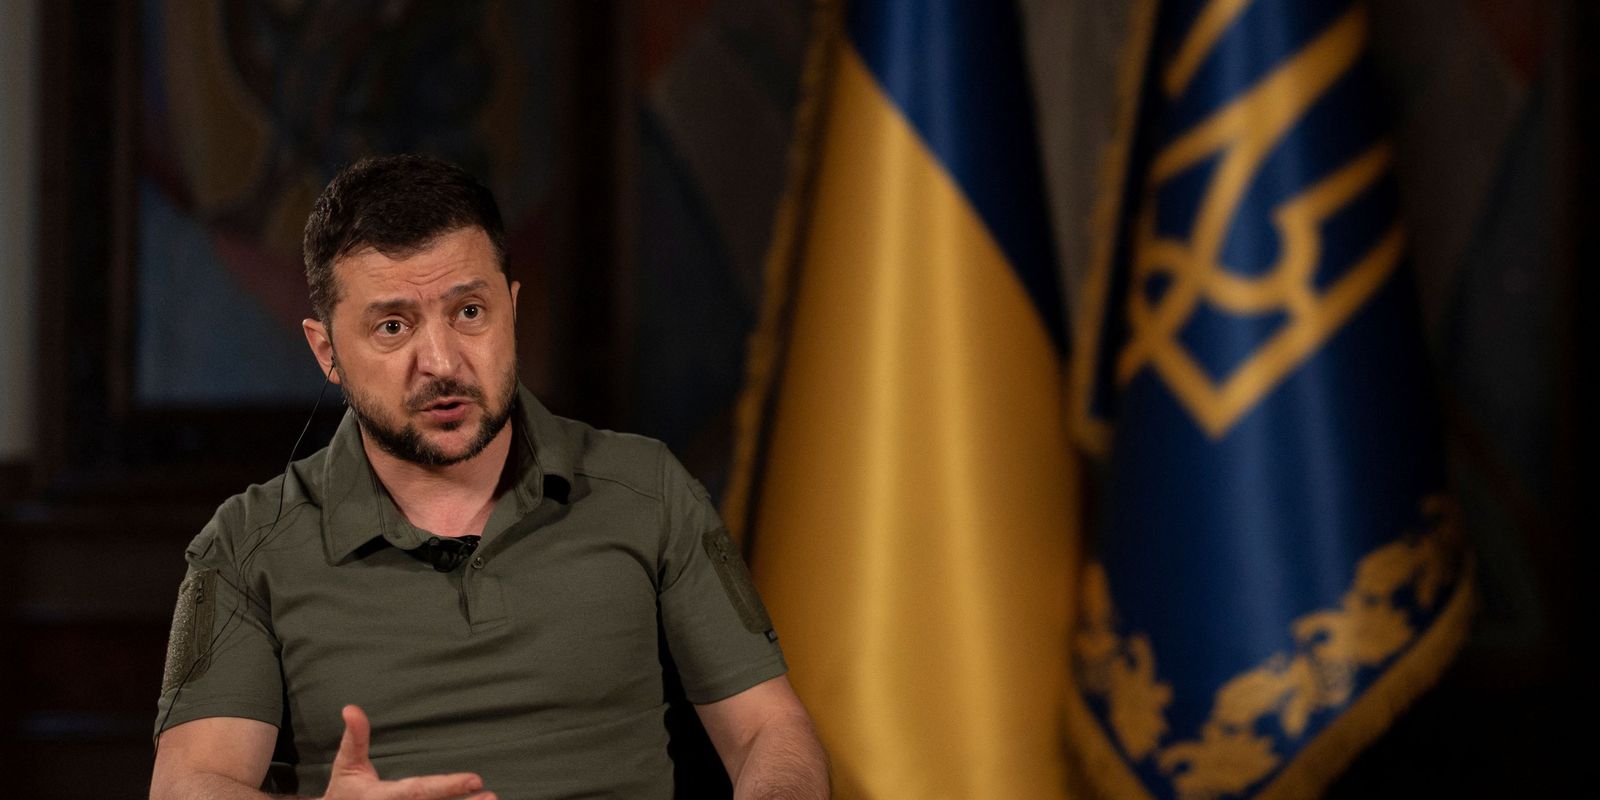 Ukraine's top officials step down in rare change